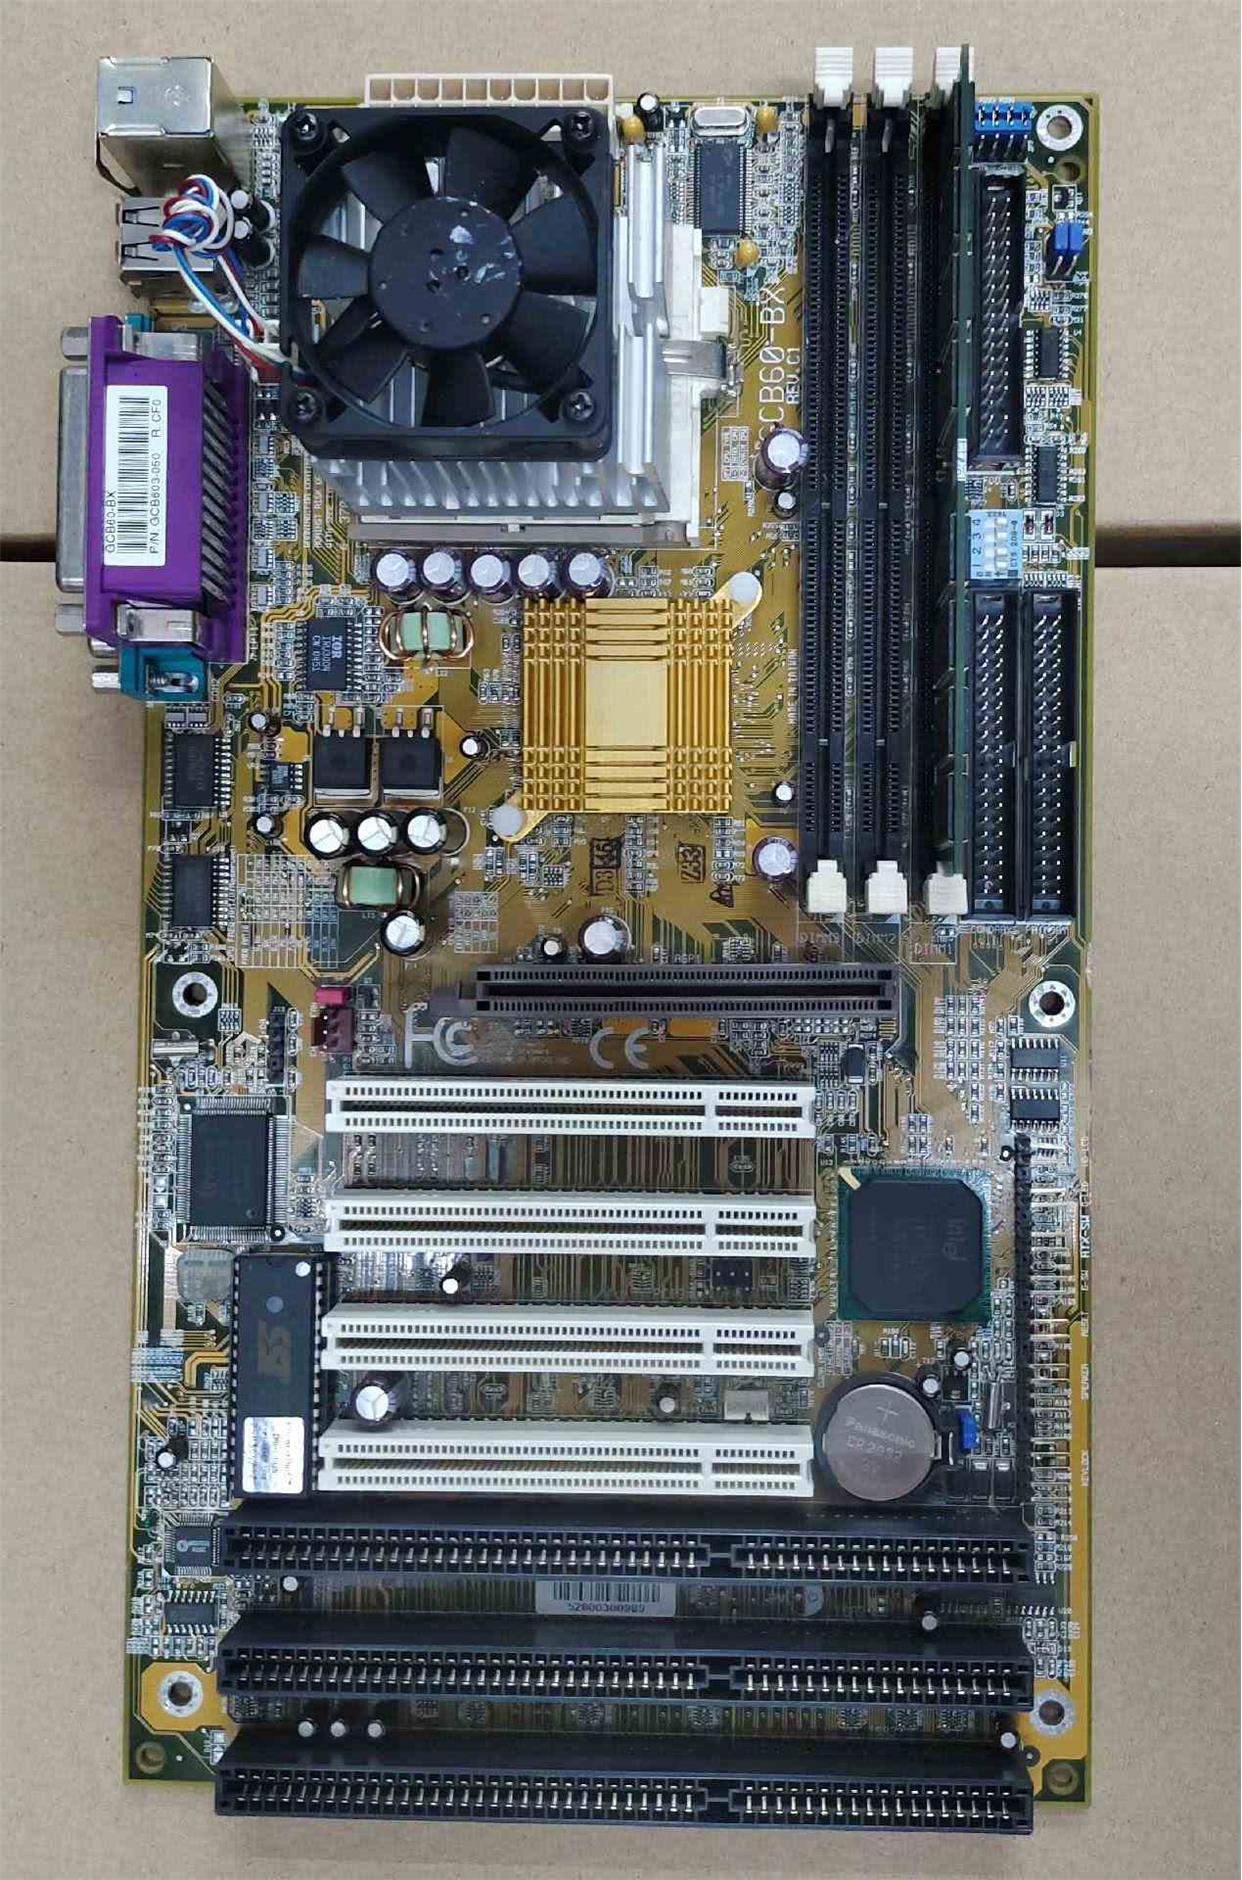 Itox GCB60-BX REV:C1 motherboard